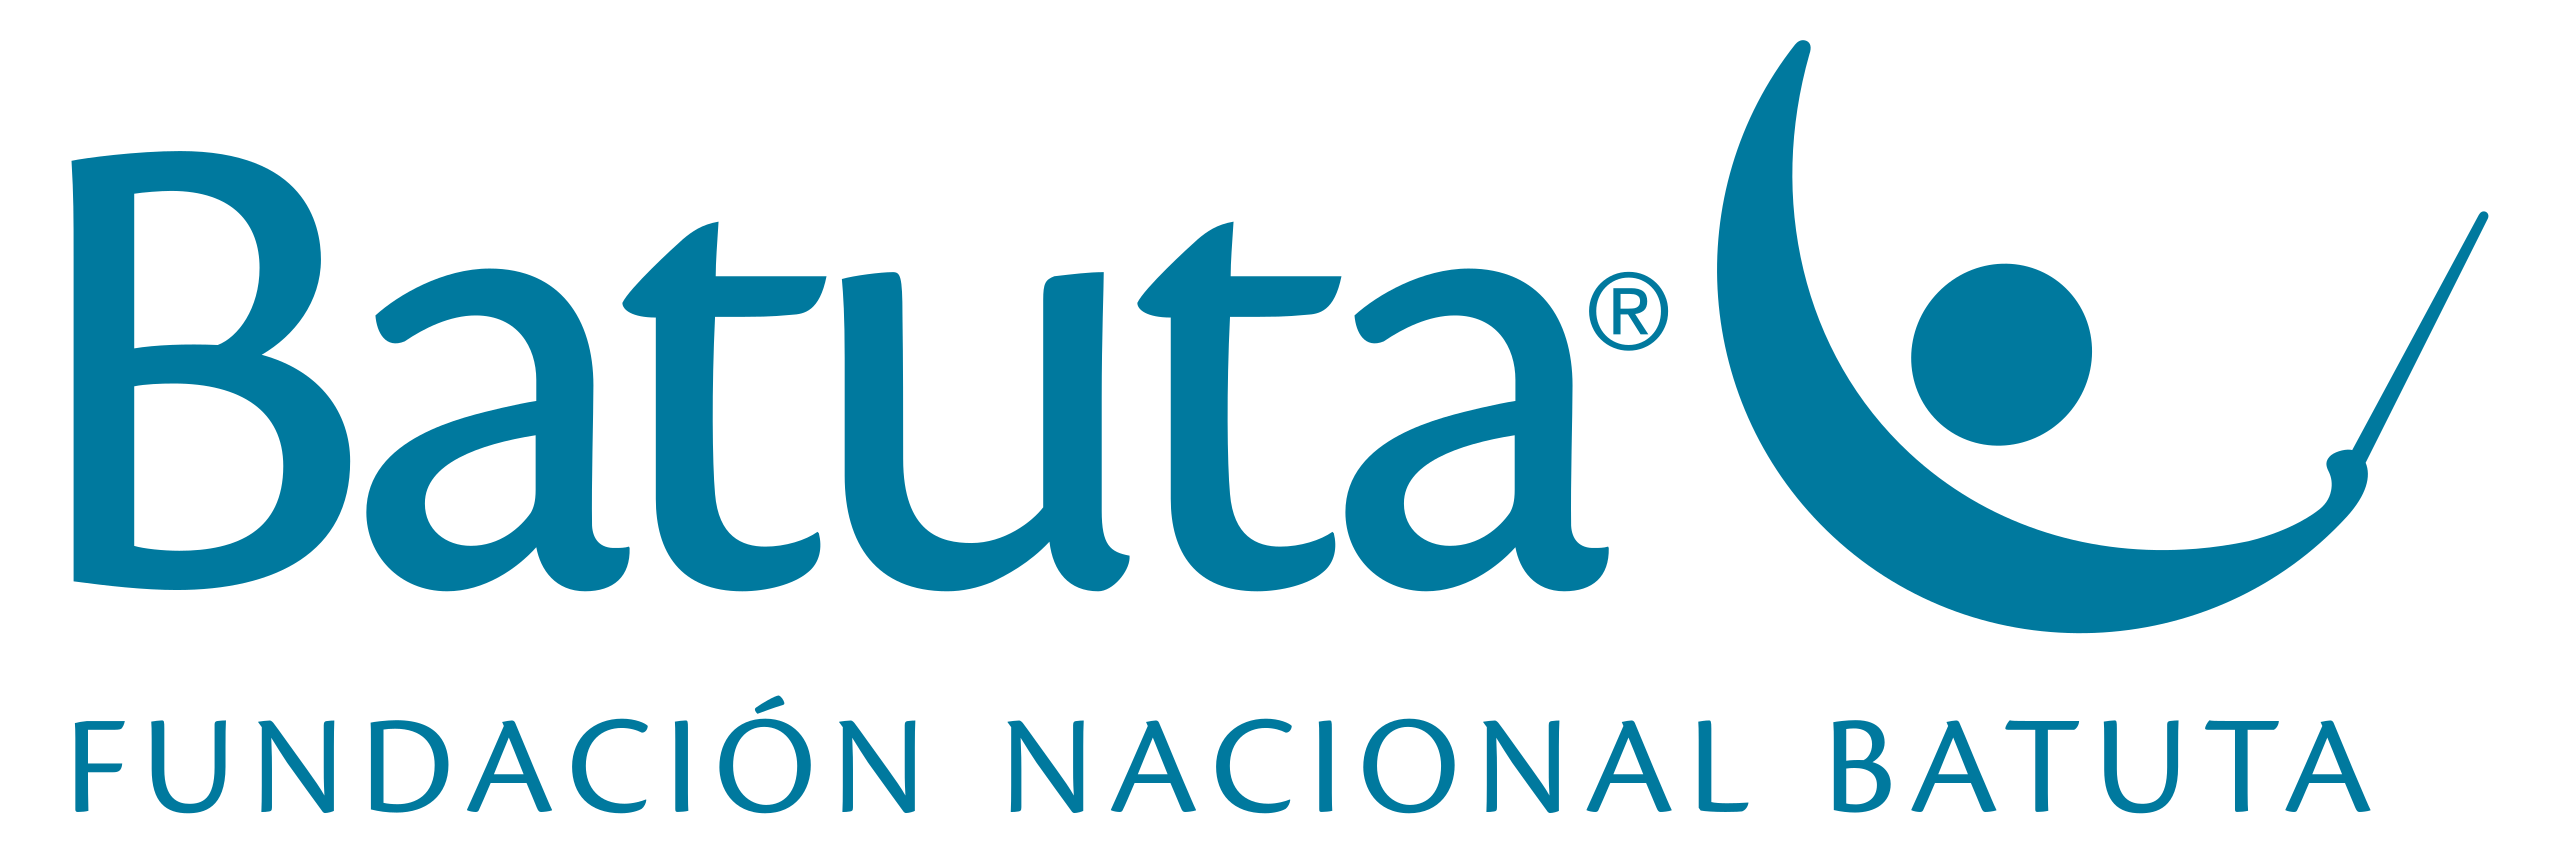 Fondation Batuta